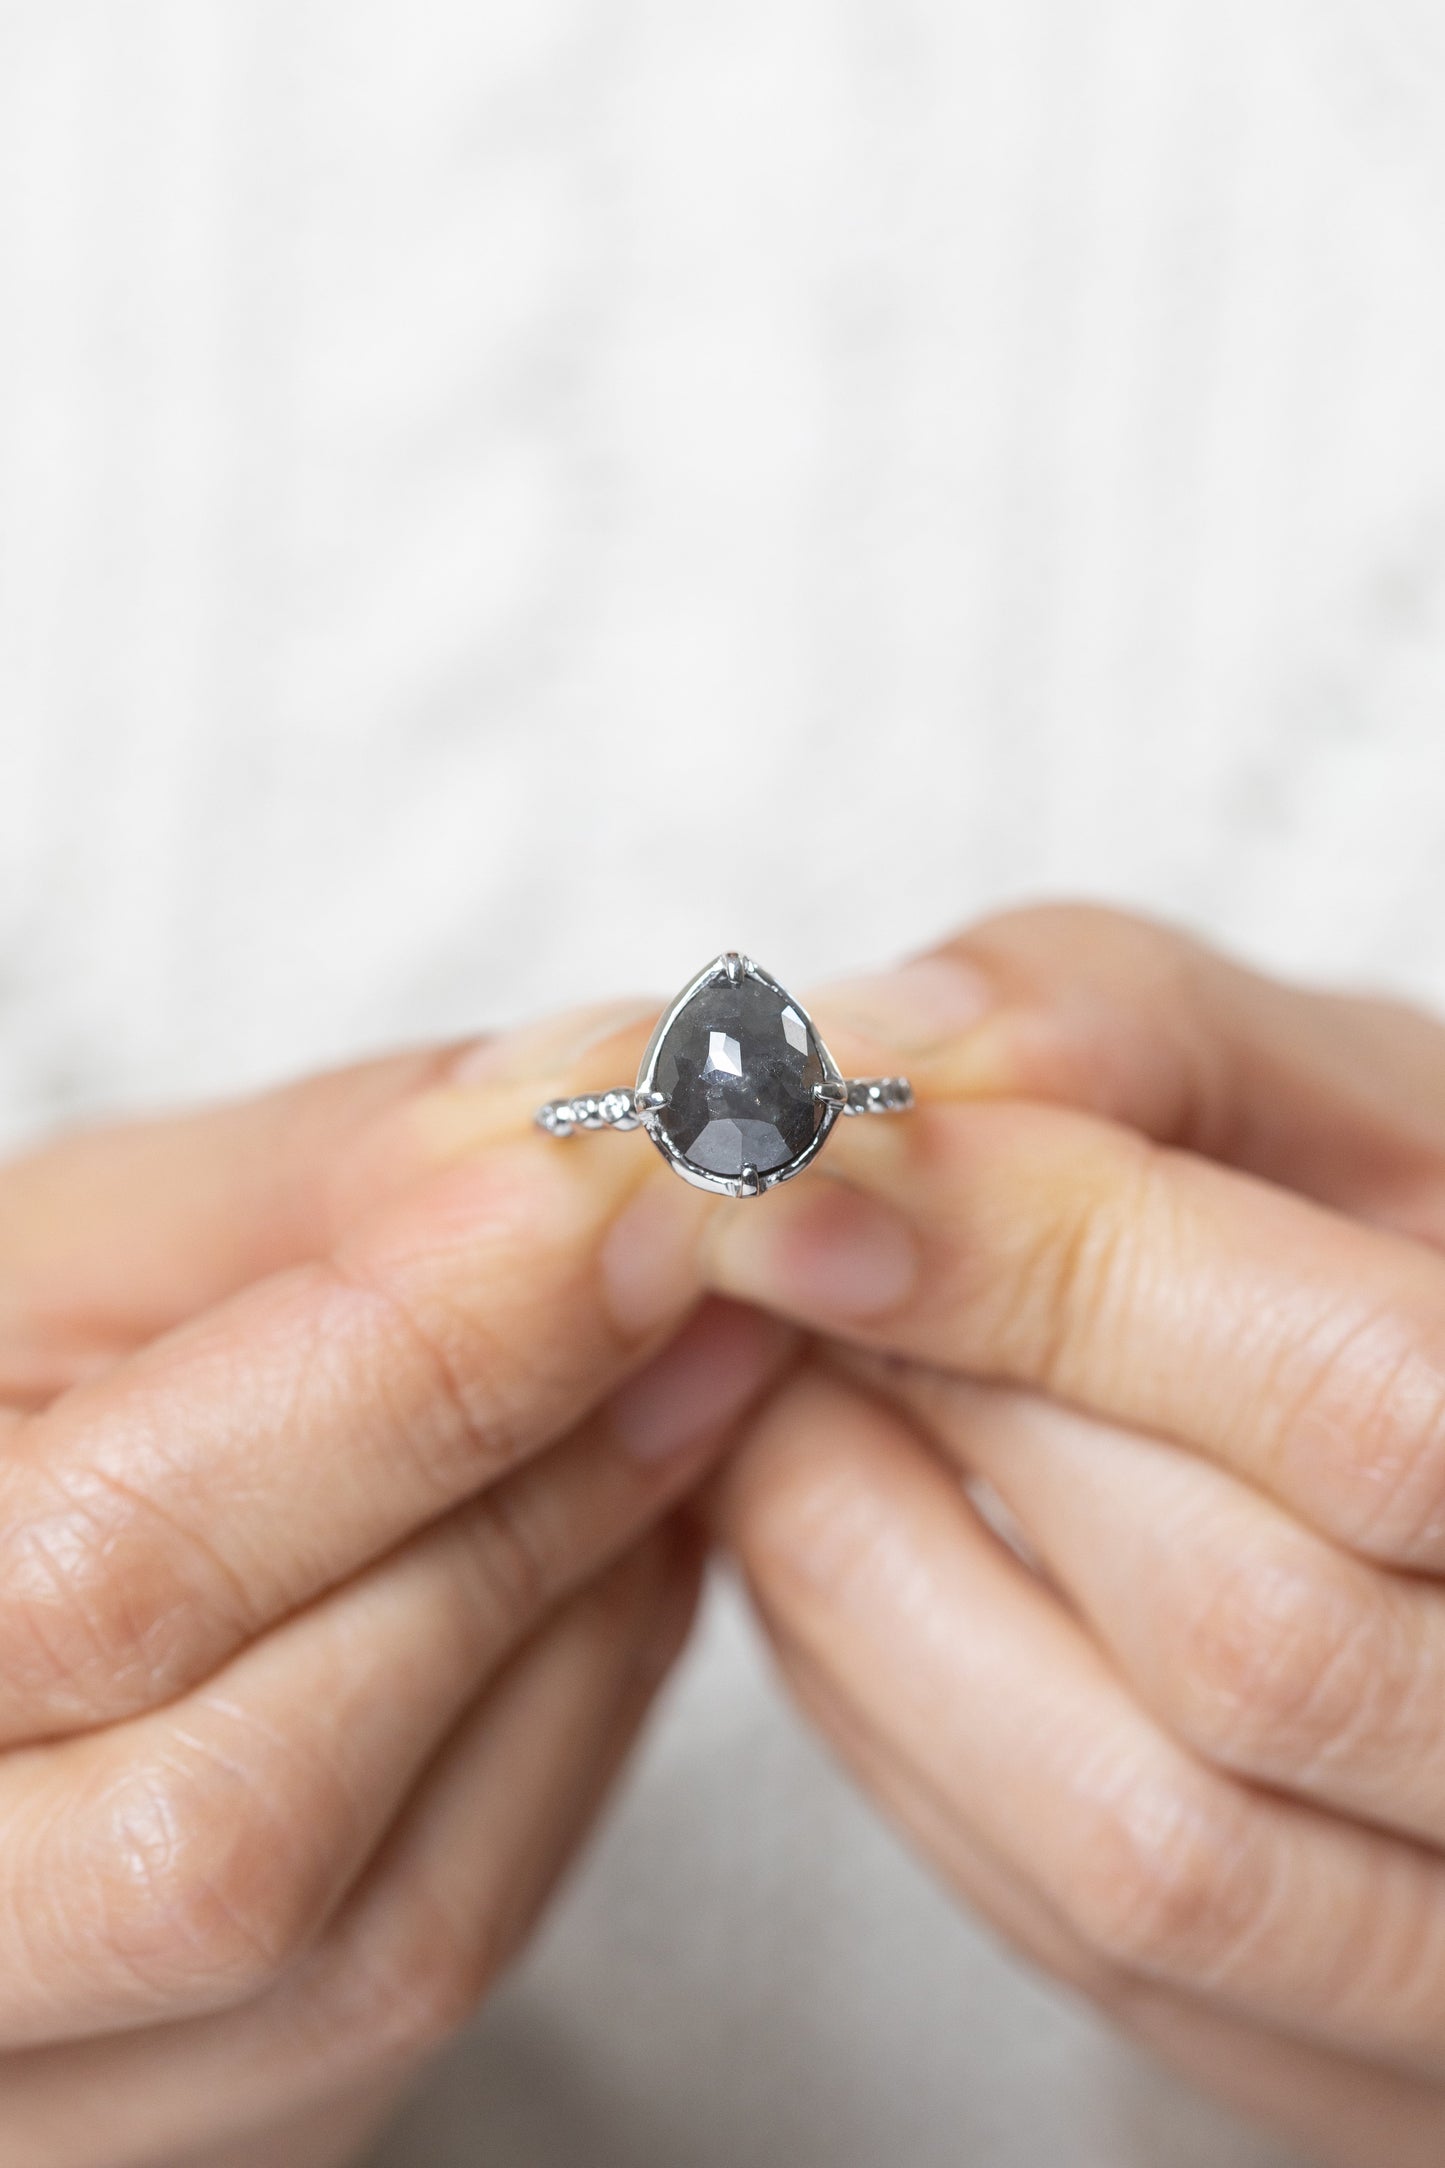 3.41ct Black Pear Shape Diamond, Pt900, with Prongs